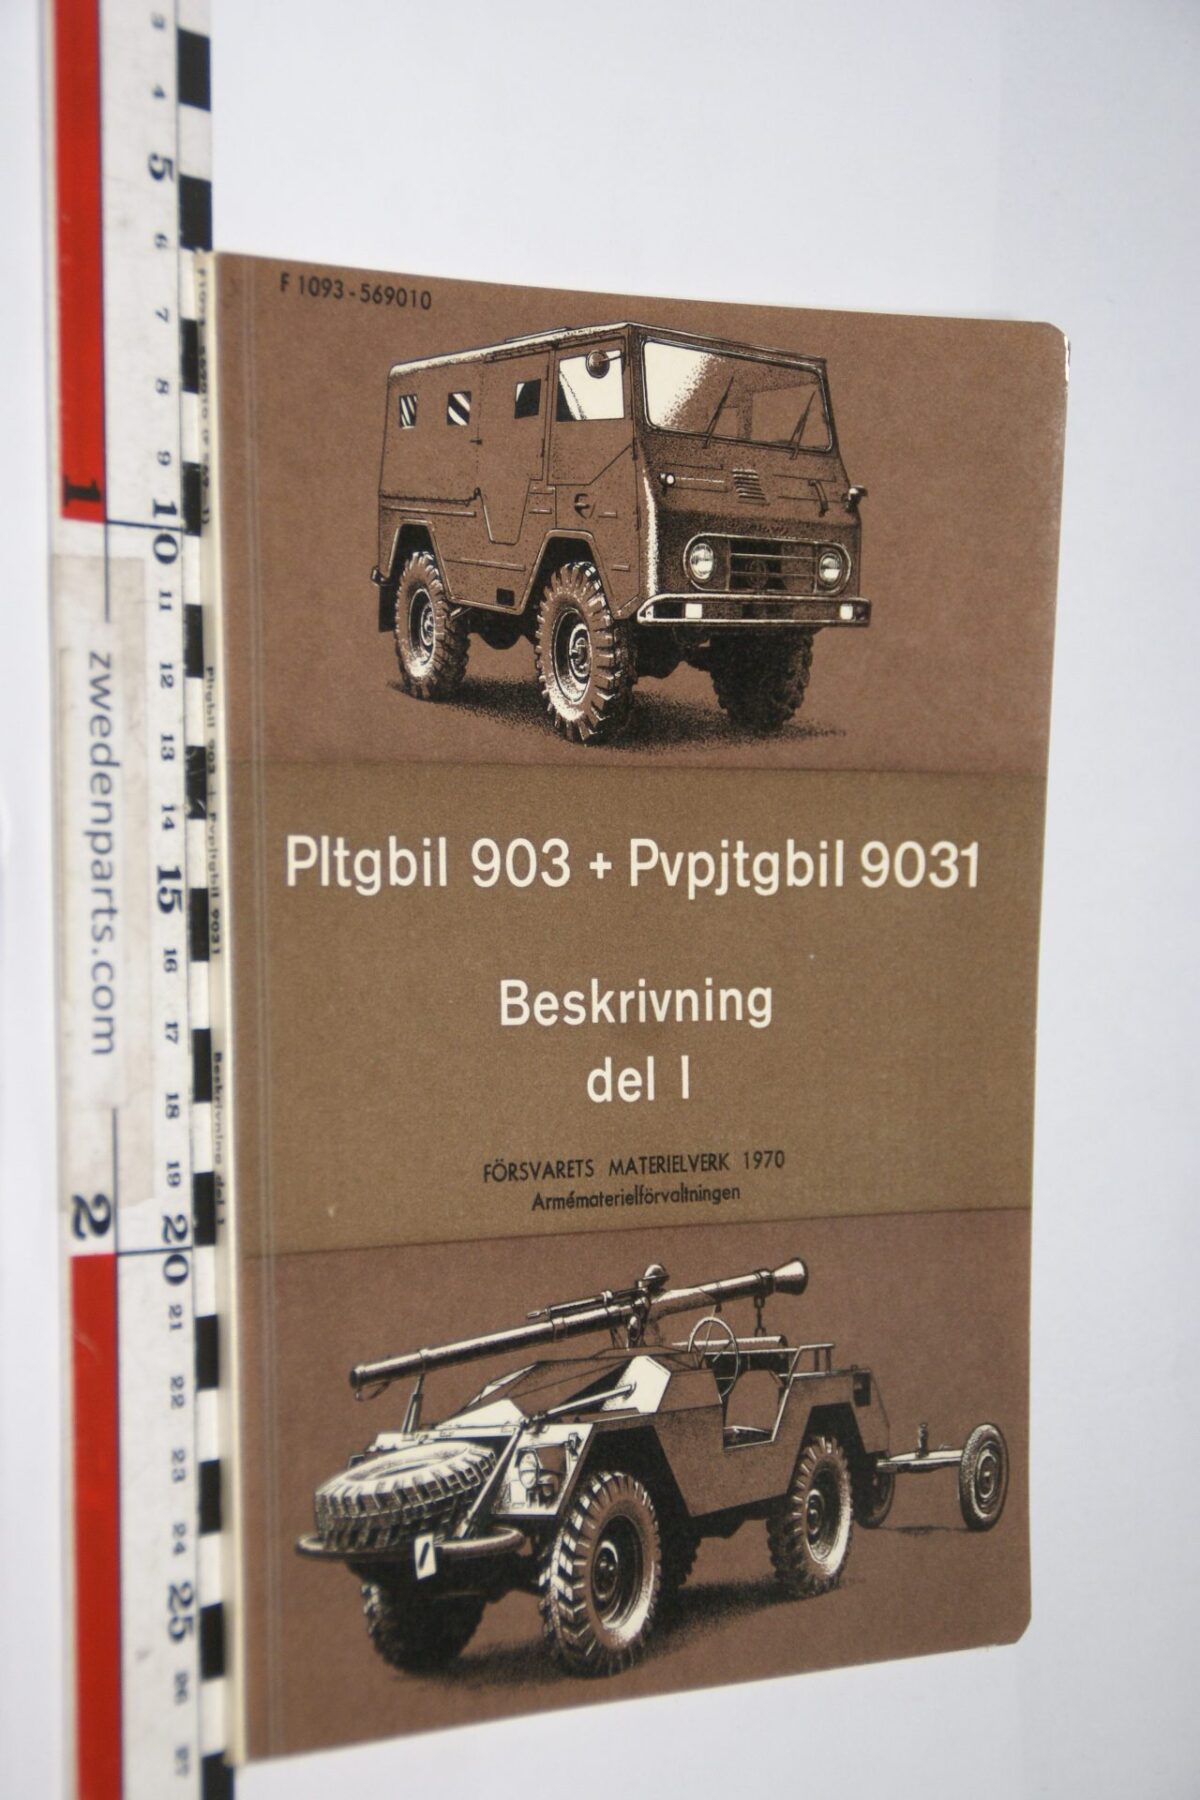 DSC07205 1970 origineel Volvo Walp Pltgbil 903, Pvpjtgbil 9031 instruktionsbok Svenskt TP 267-1, F1093-569010